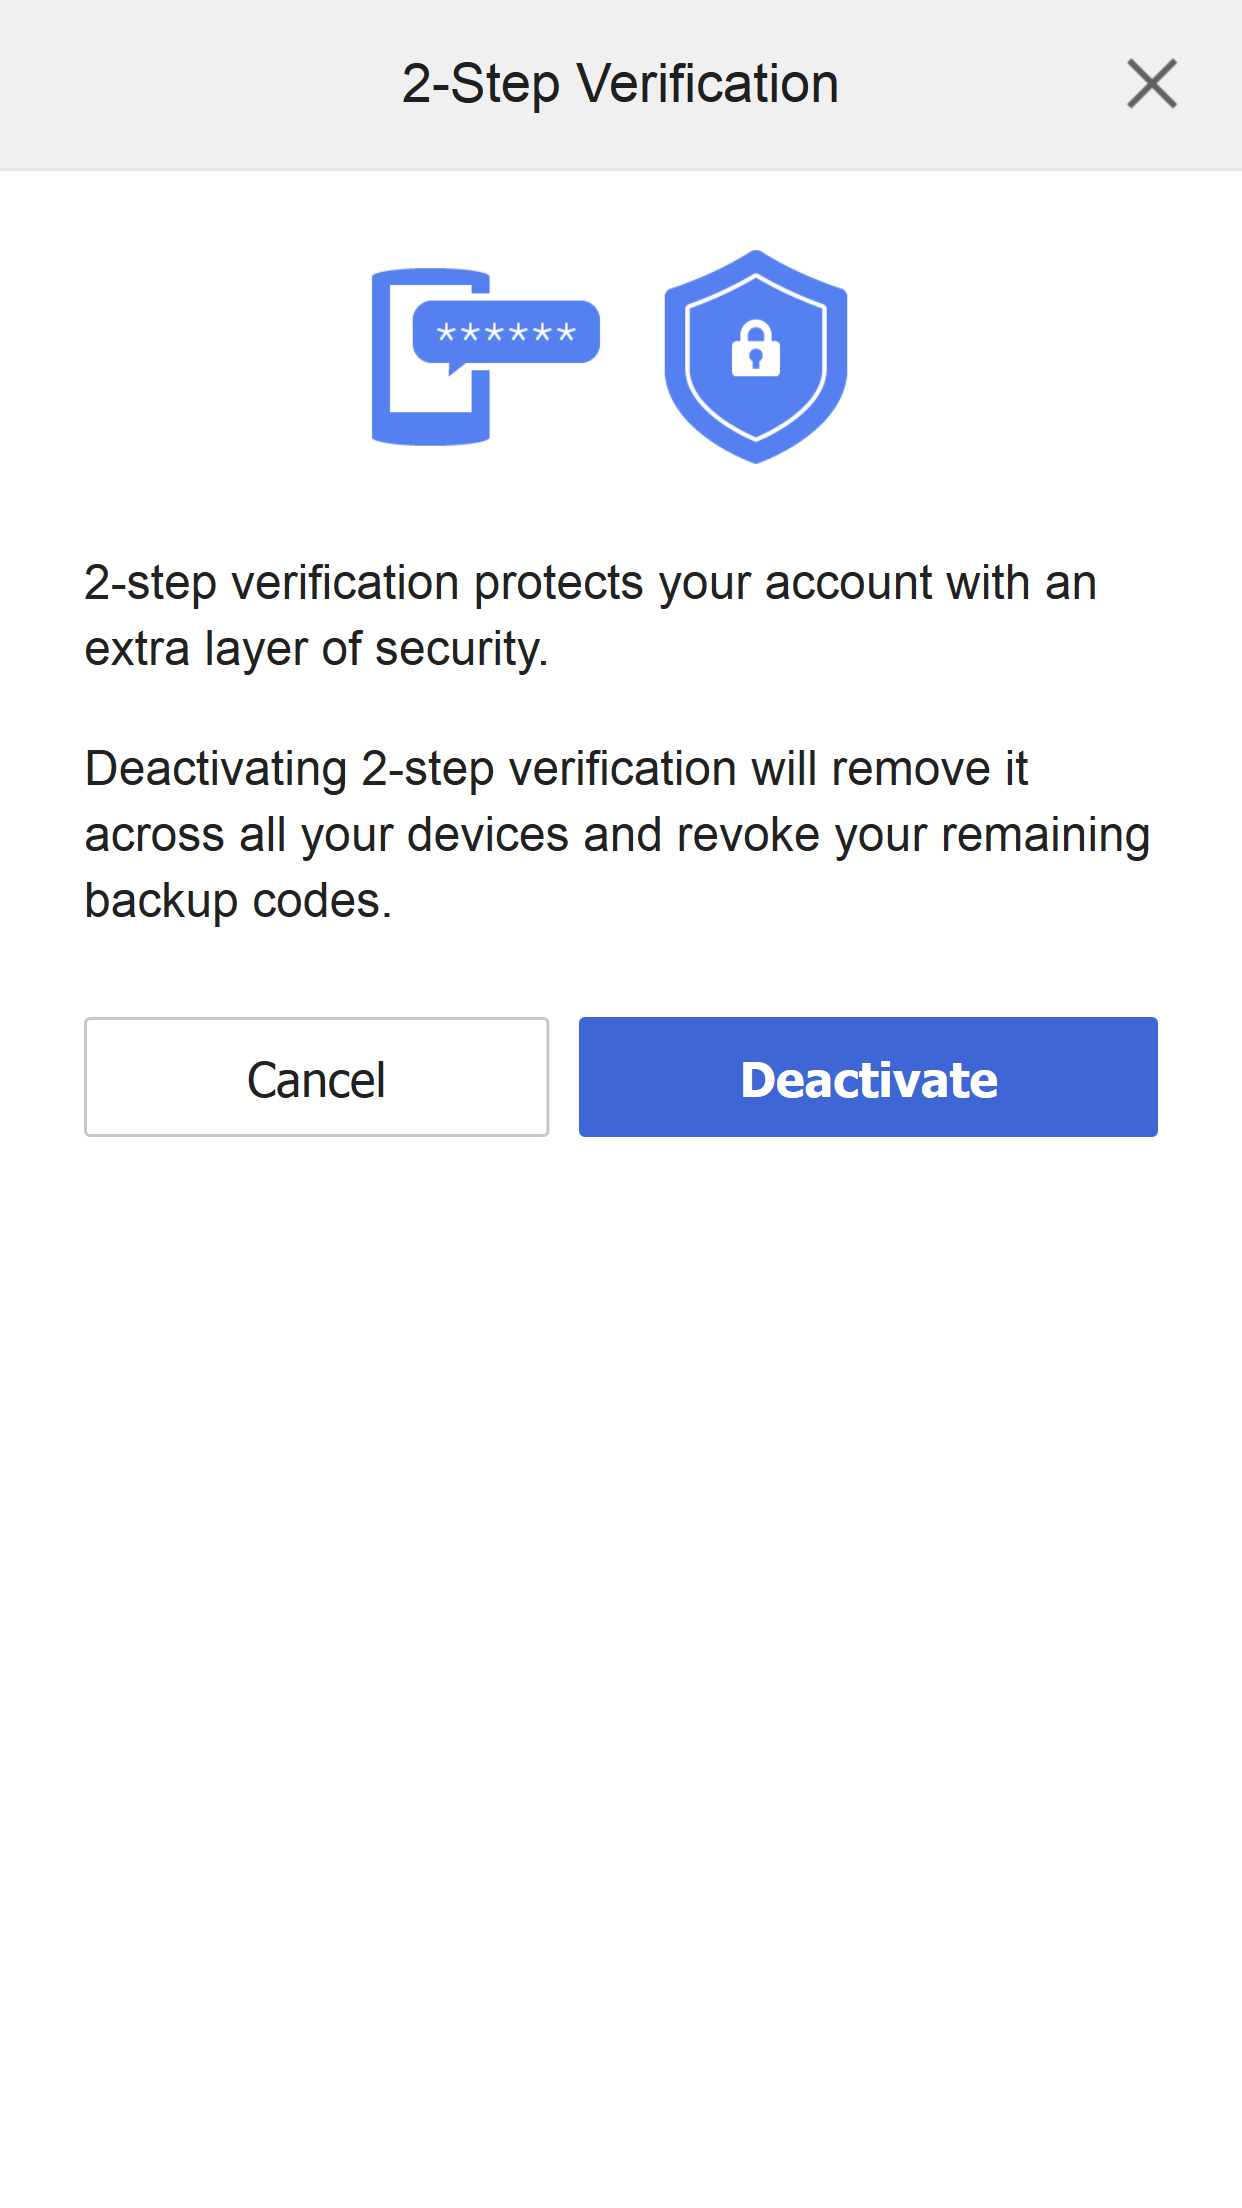 2-Step Verification invalidate